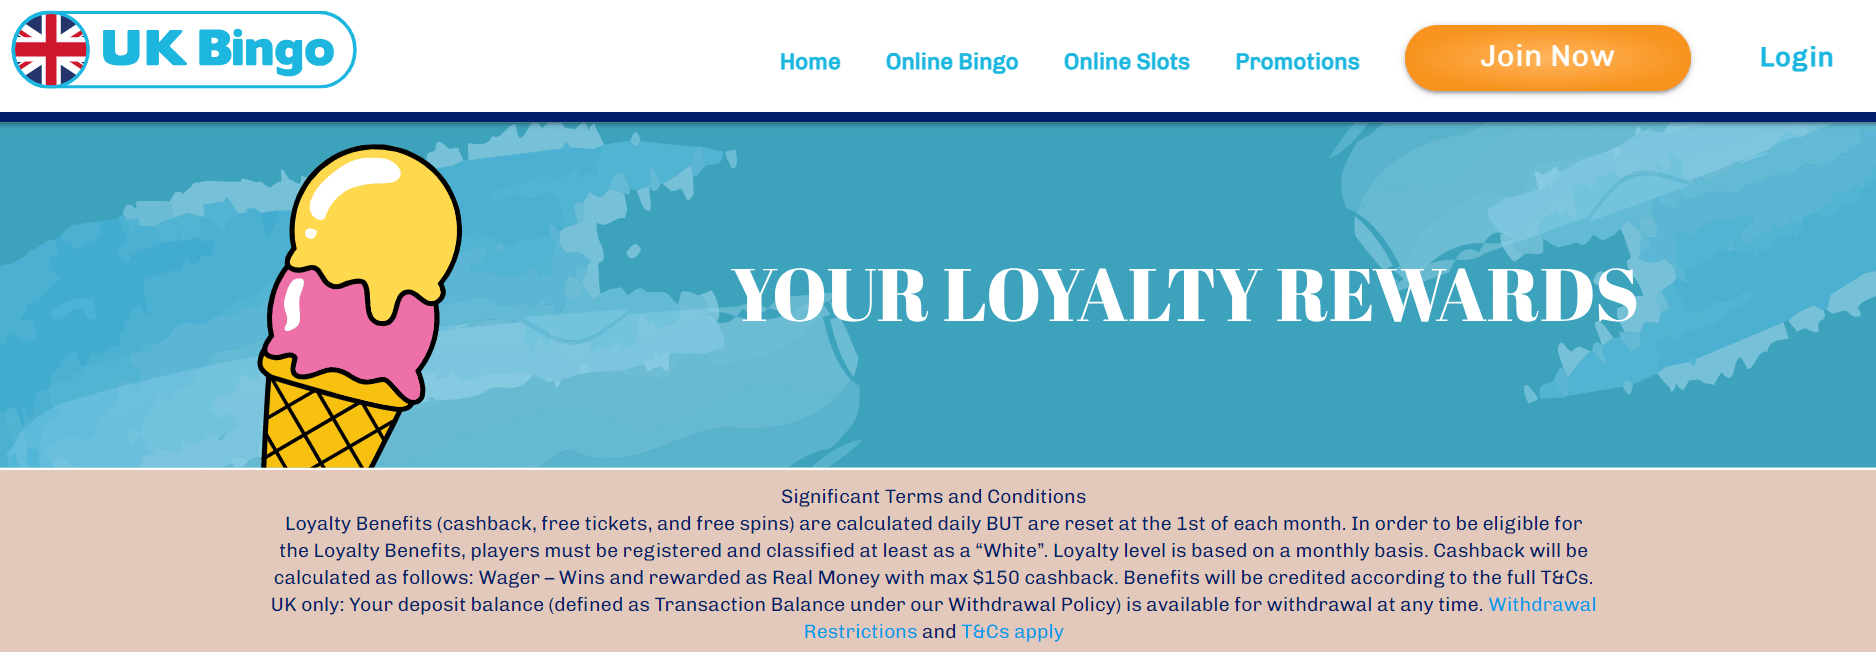 uk bingo loyalty program